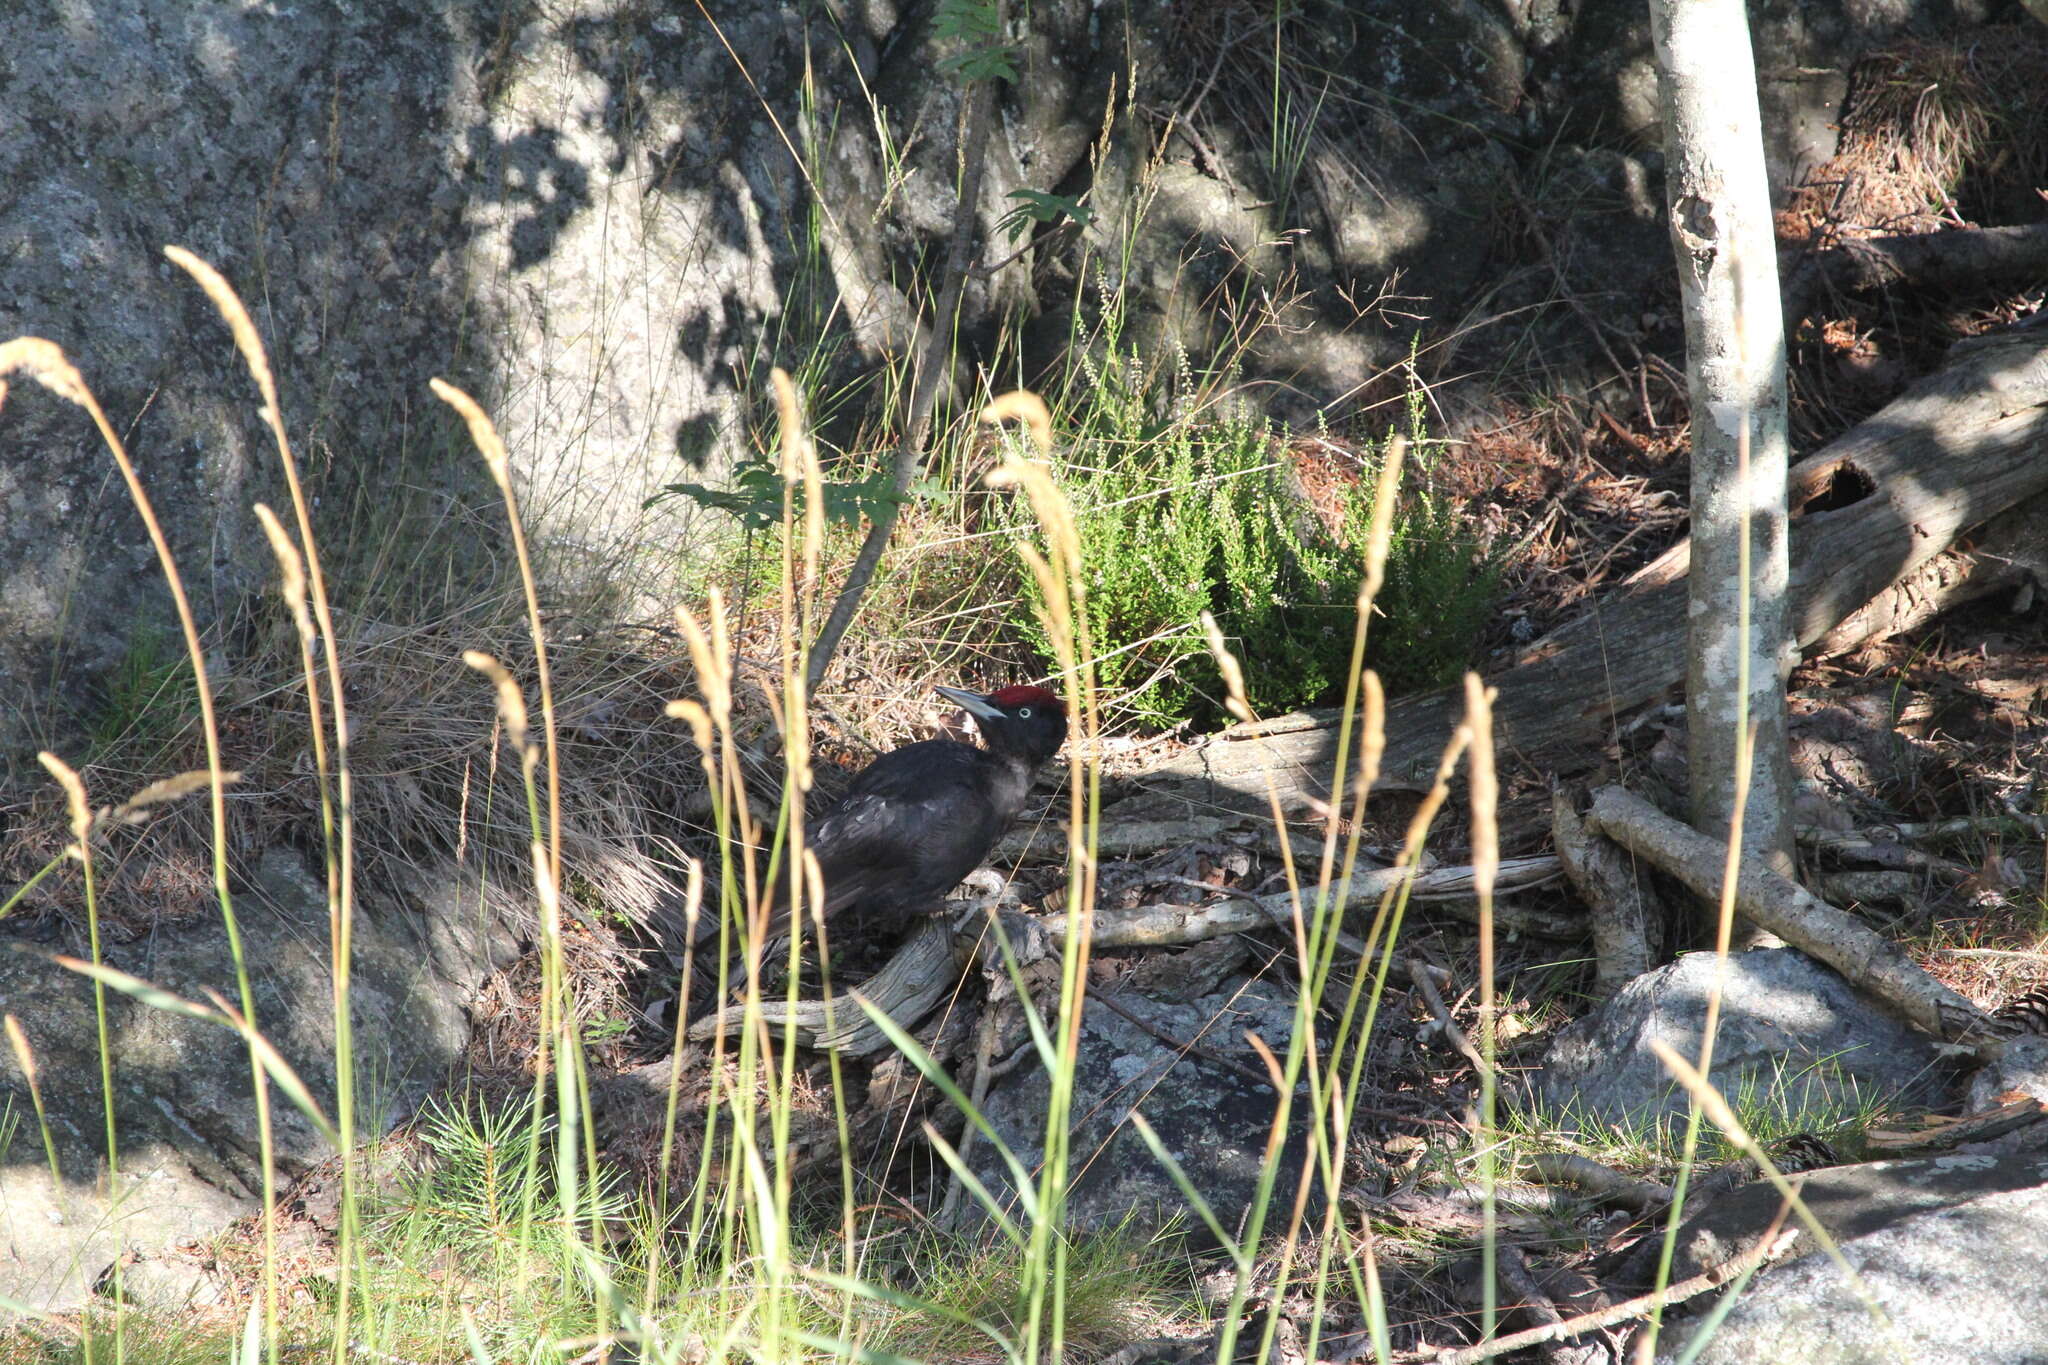 Image of Black Woodpecker